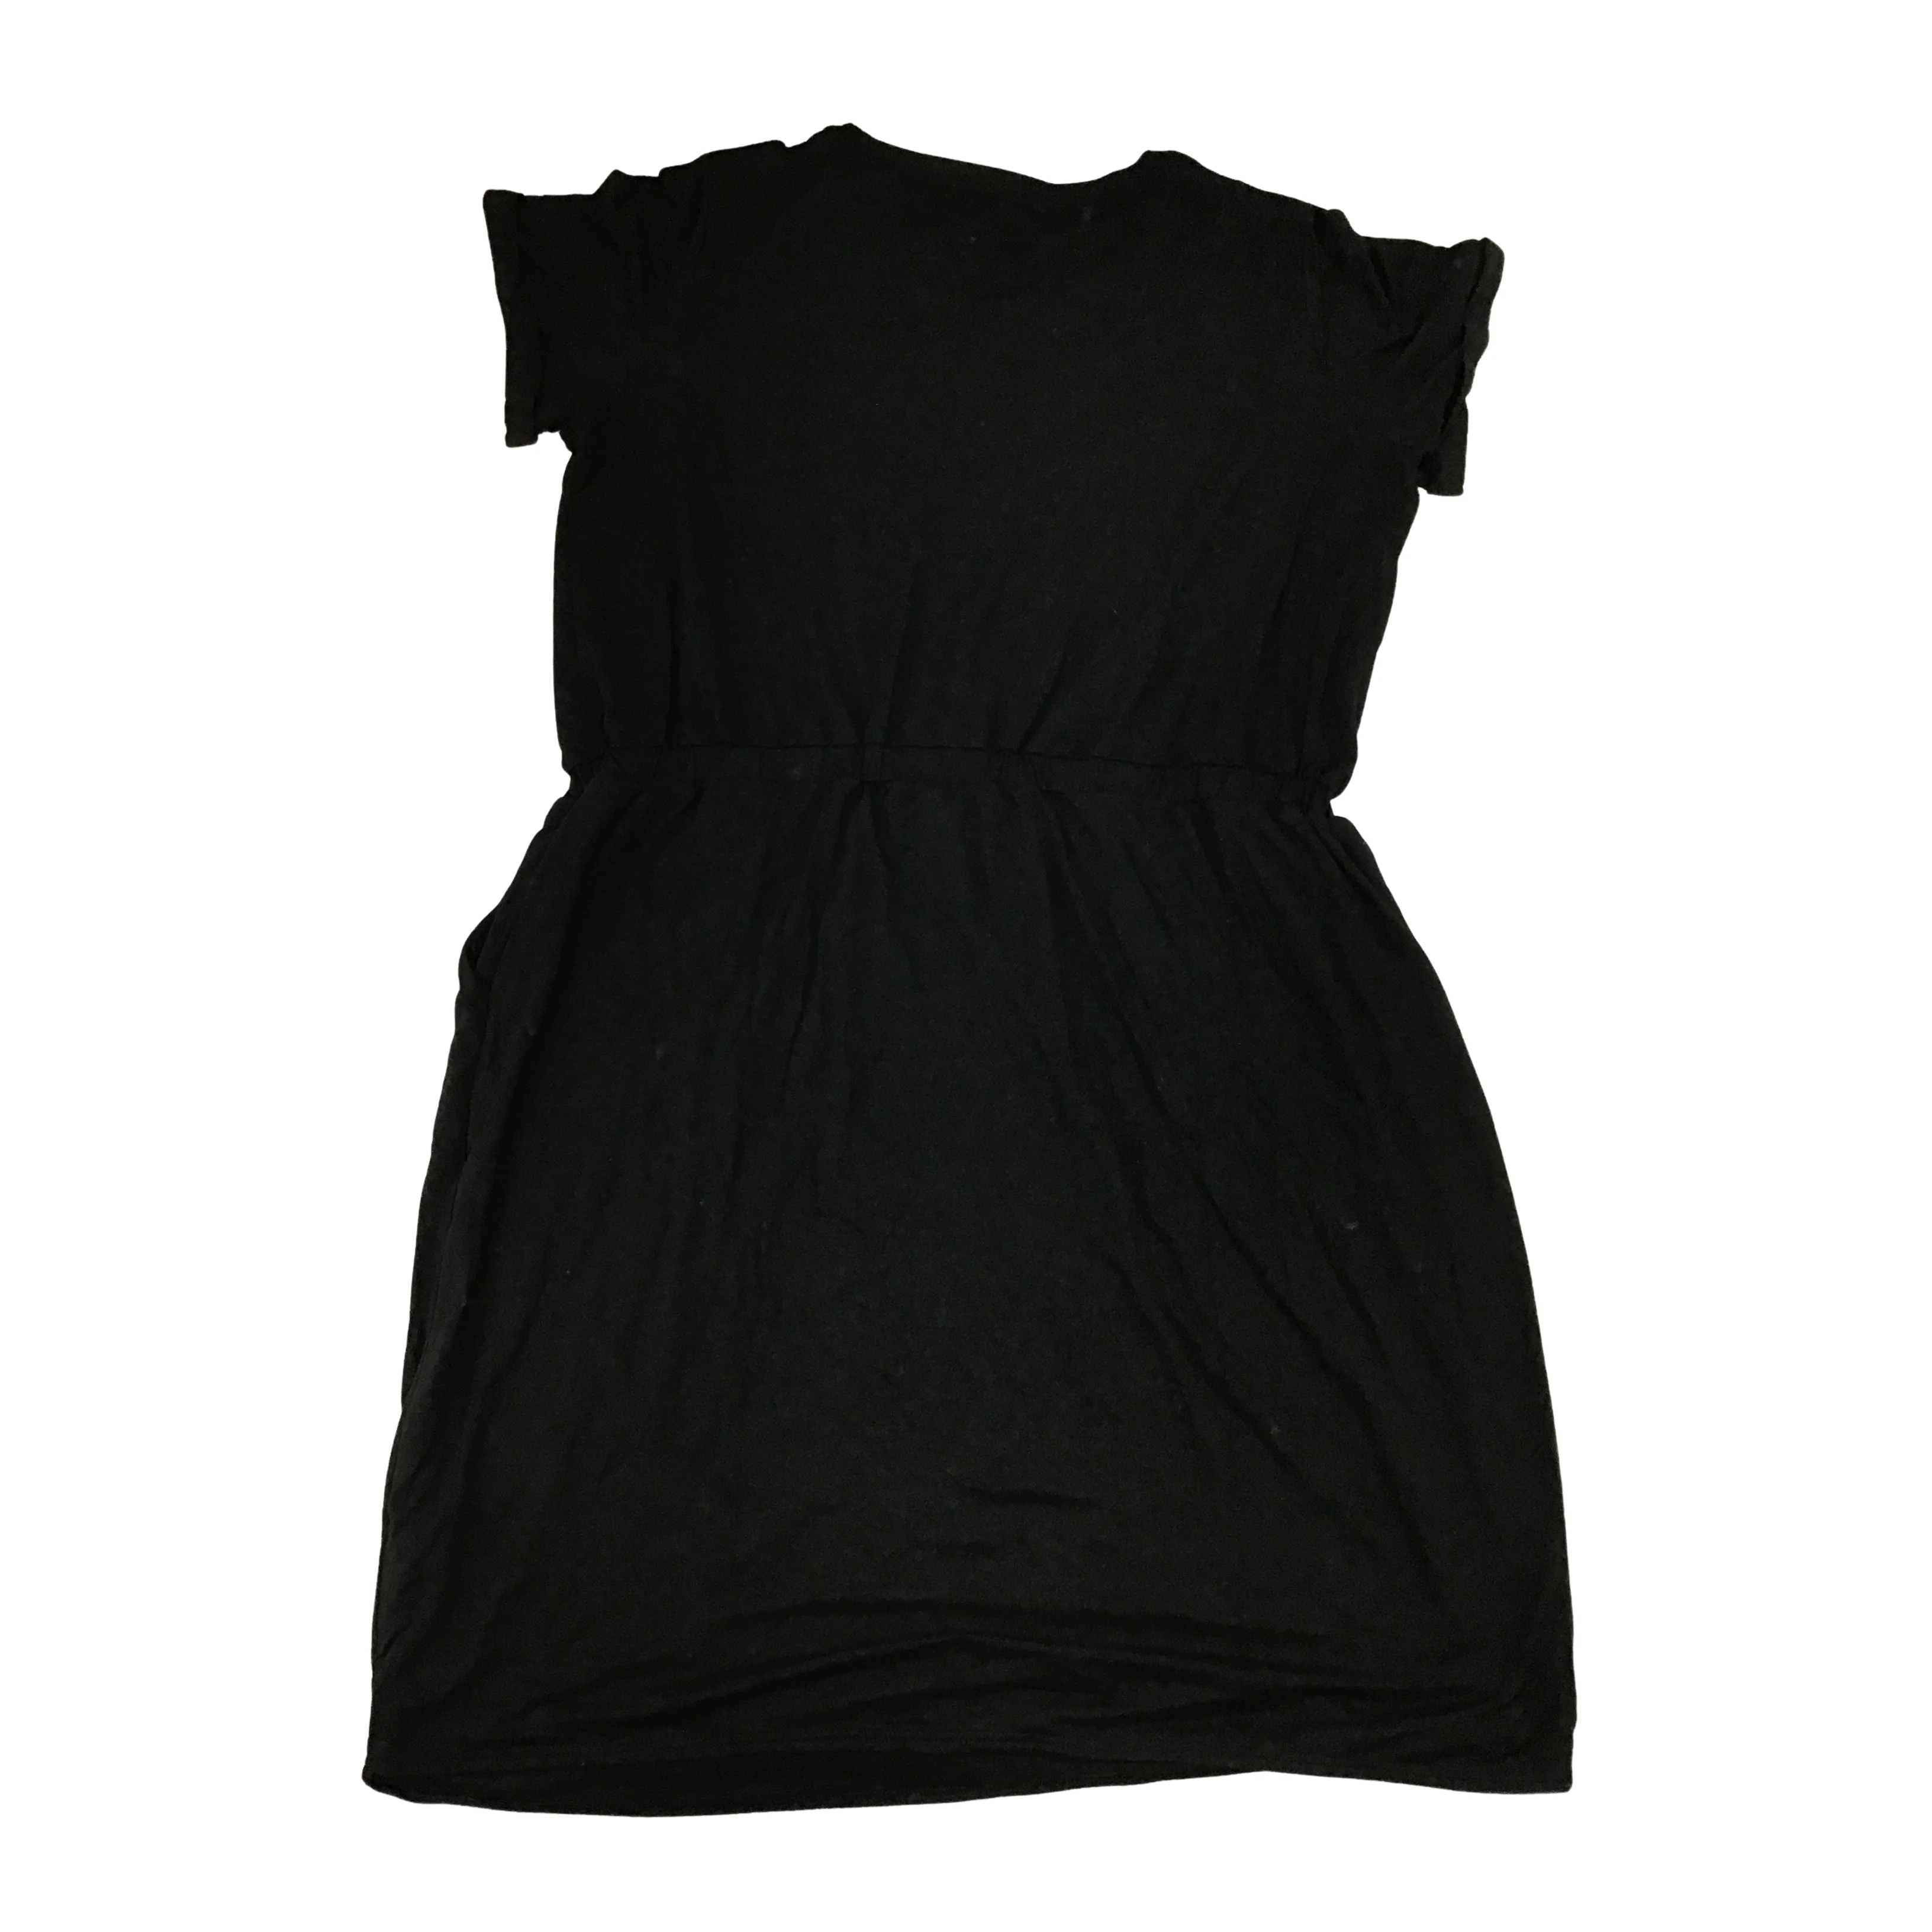 32 Degrees Cool: Women's T-shirt Dress / Black / Pockets / XXL